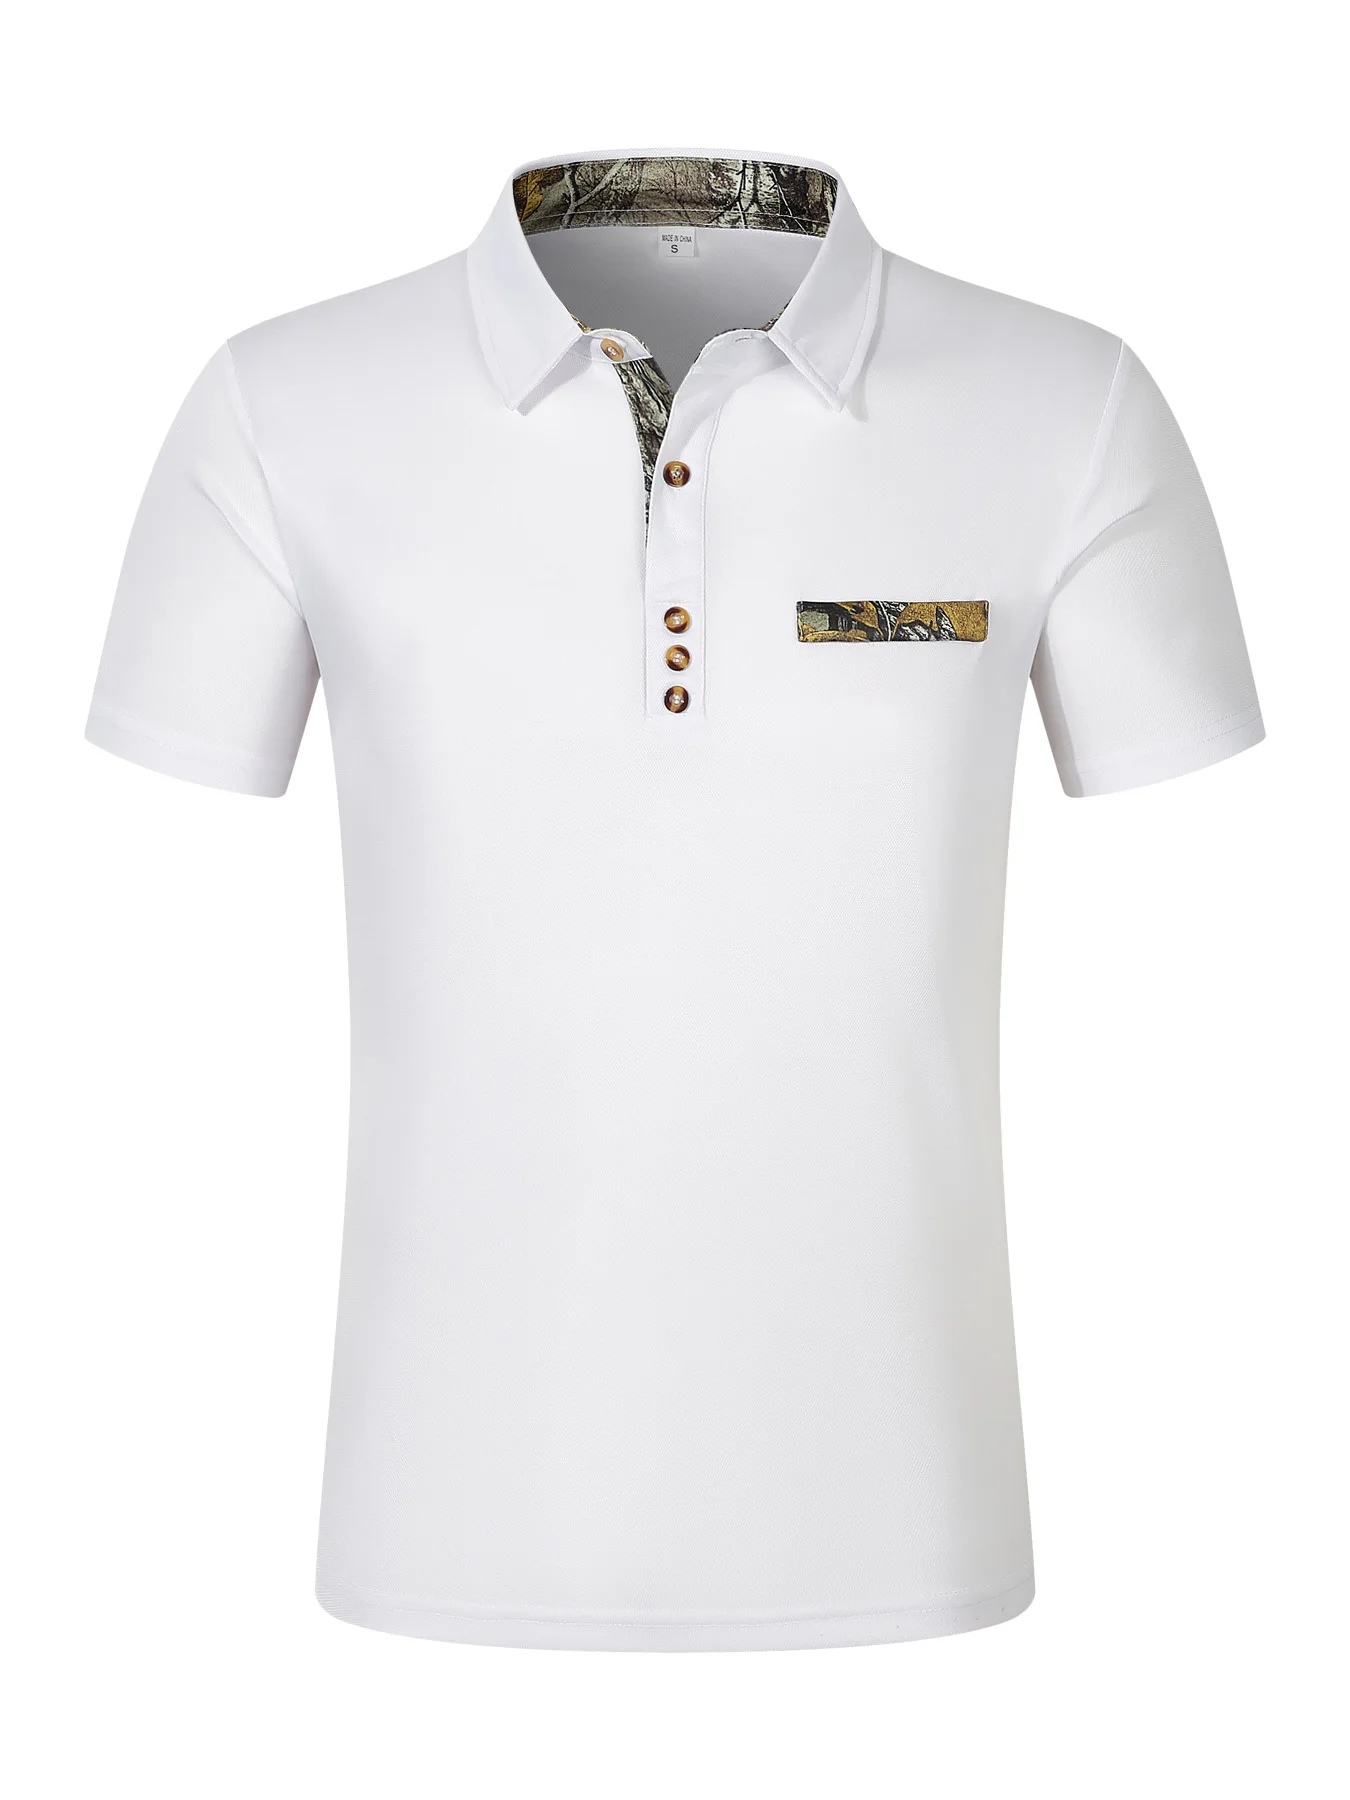 Men's casual short-sleeved polo shirt Fashion lapel zipper shirt men's breathable polo shirt-animated-img